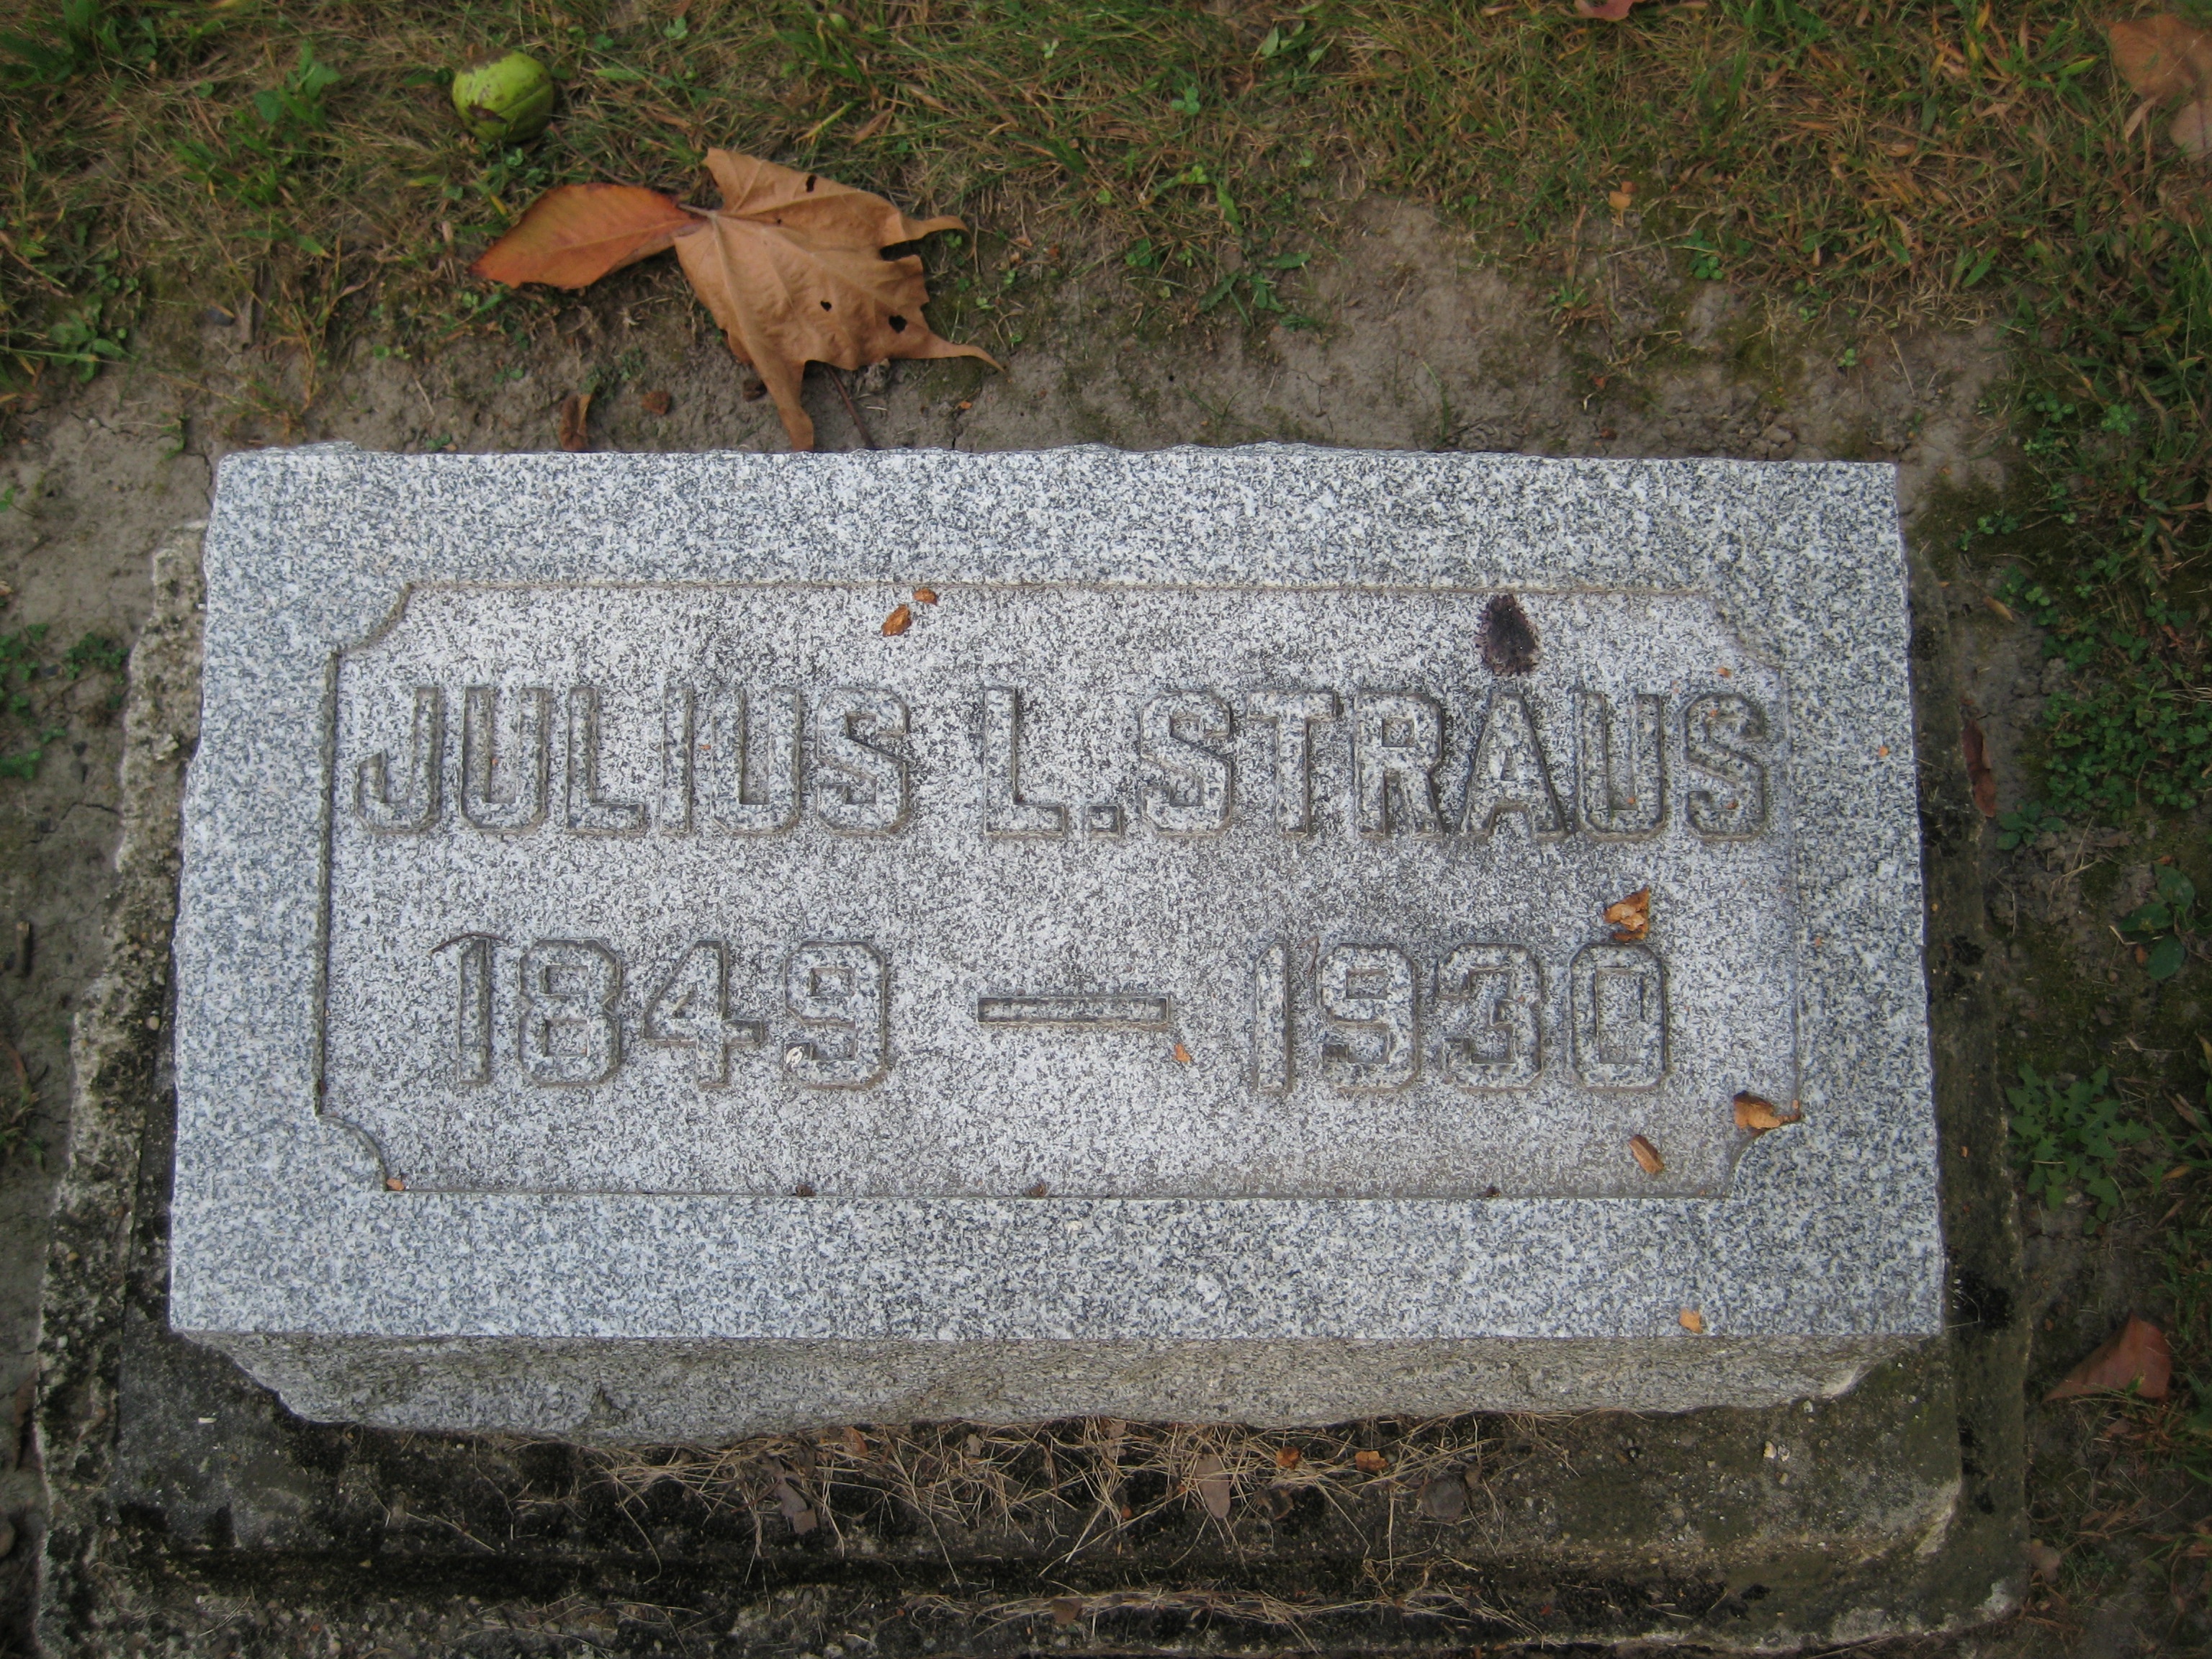 Straus, Julius L.